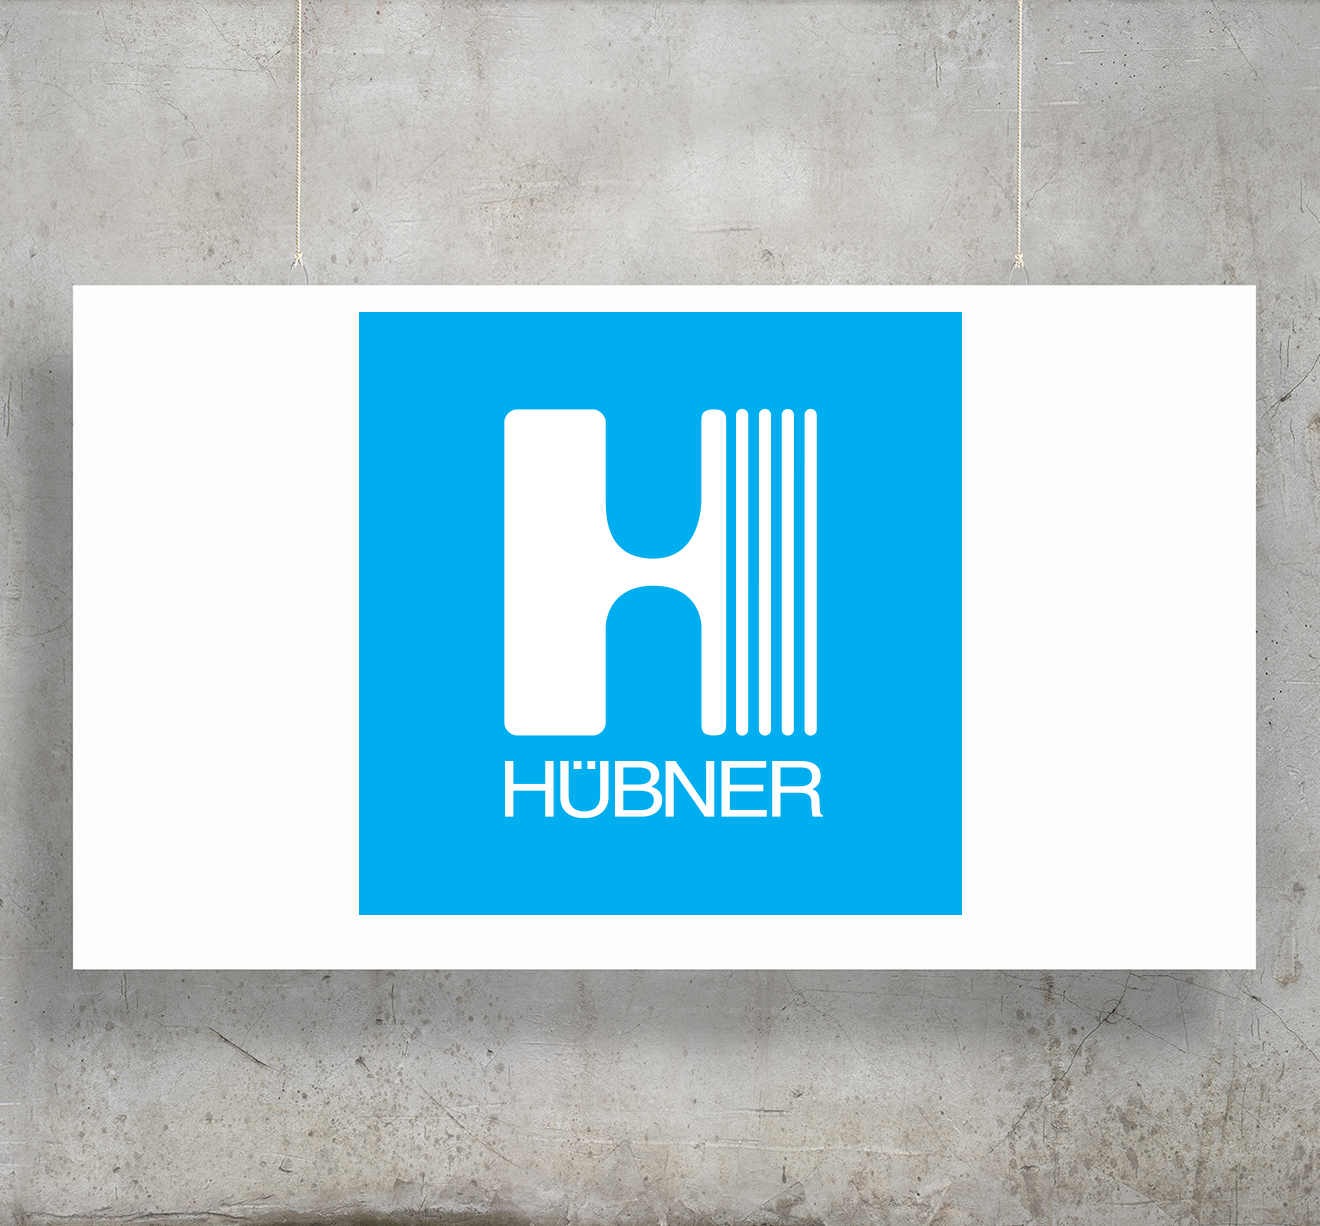 公司档案 -  Hubner